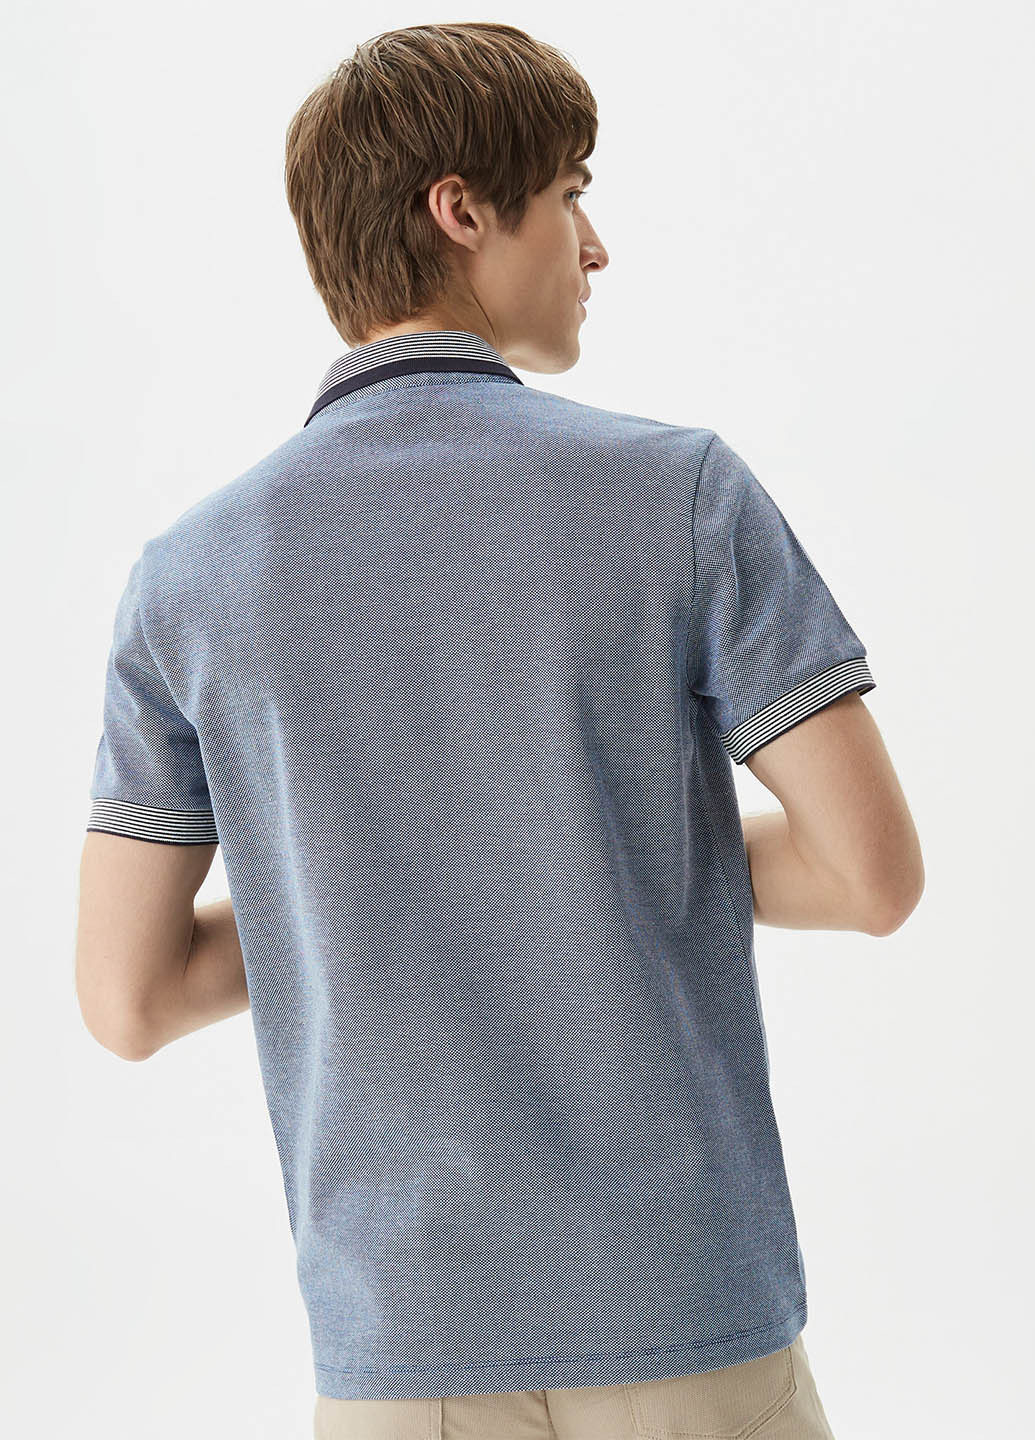 Серо-синяя футболка-поло для мужчин Lacoste меланжевая